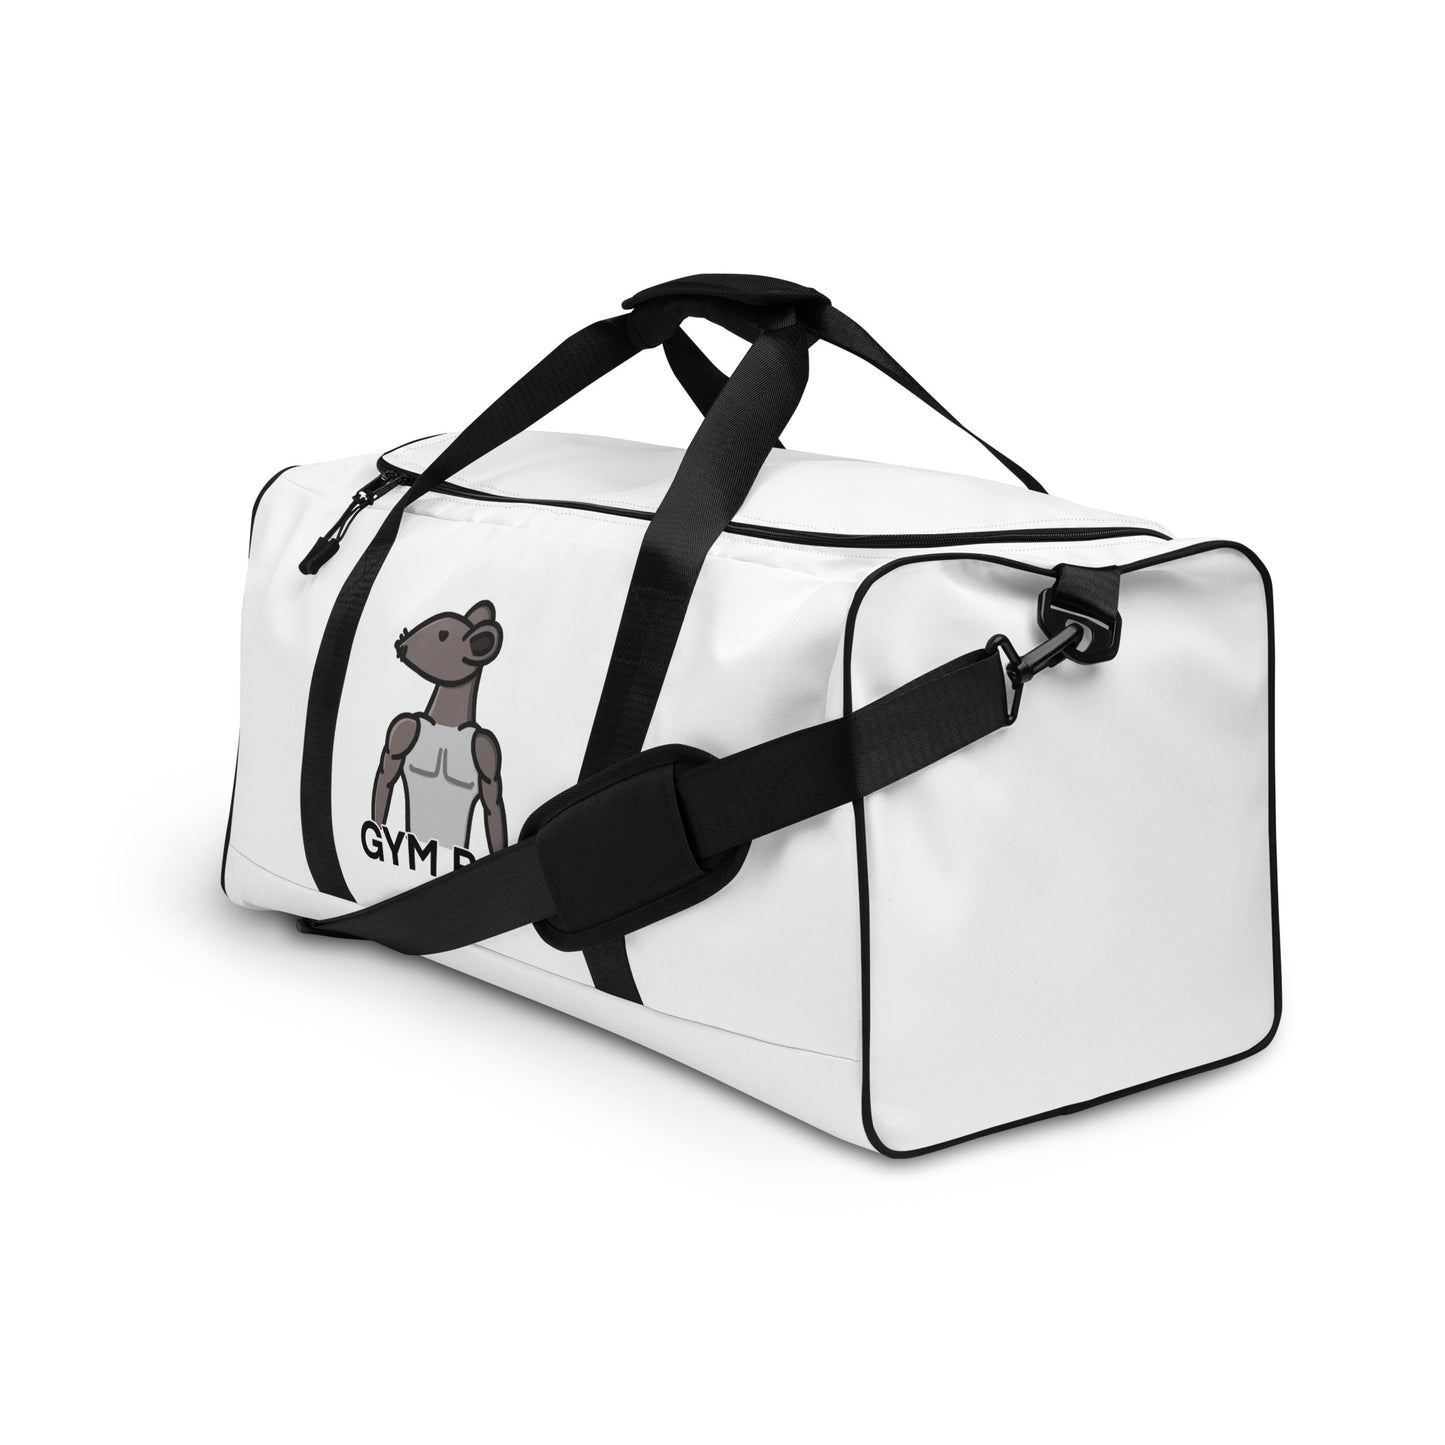 “Gym Rat” Basic White Duffle bag